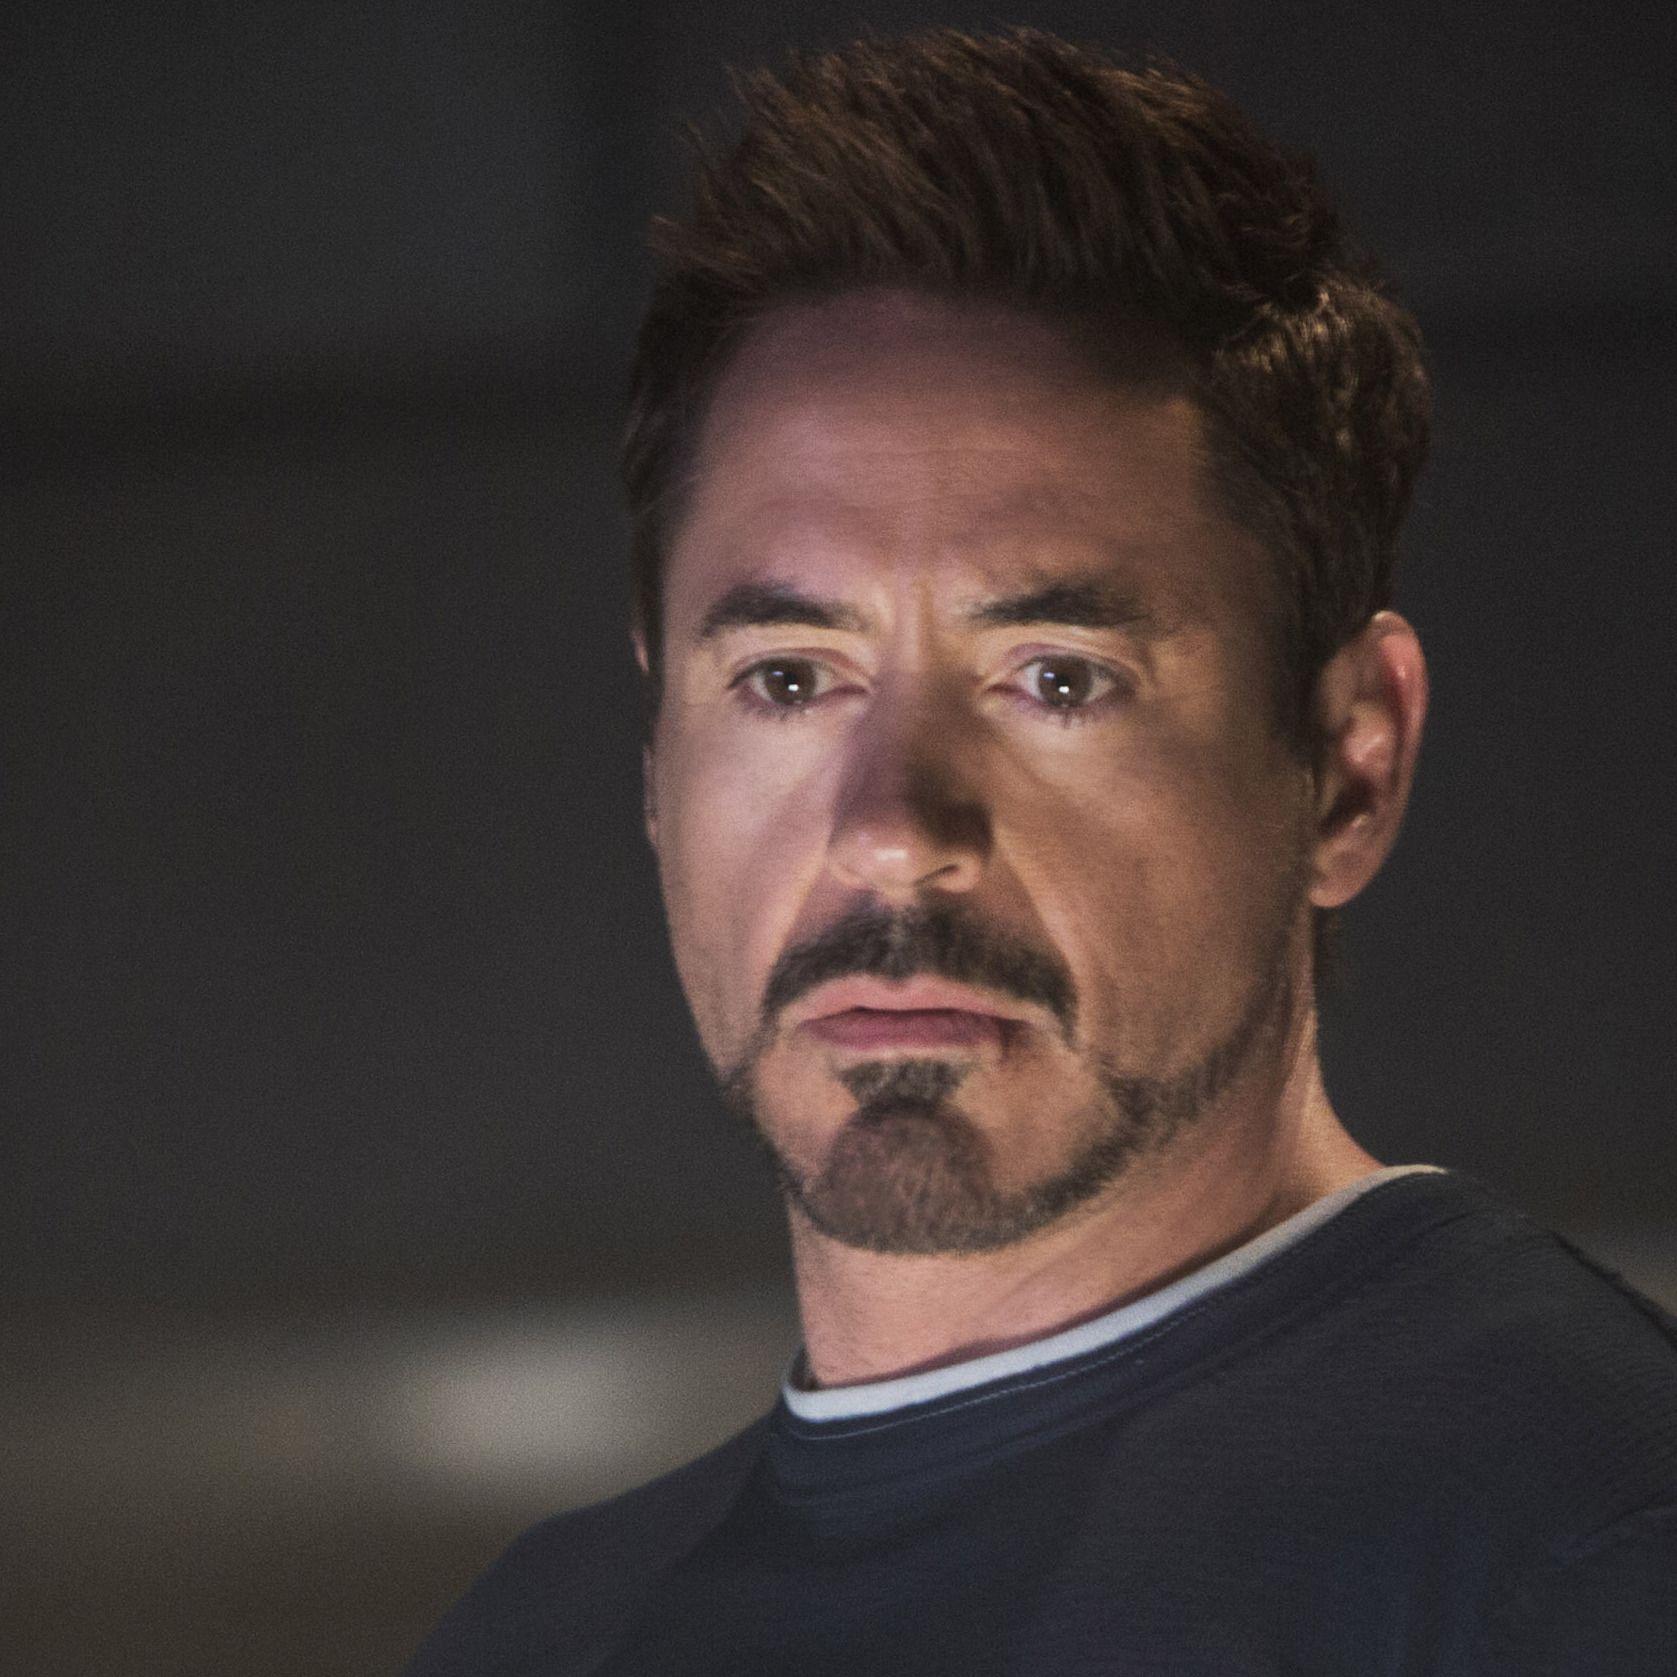 Iron Man Beard Style.. Downey Jr. as Tony Stark in Iron